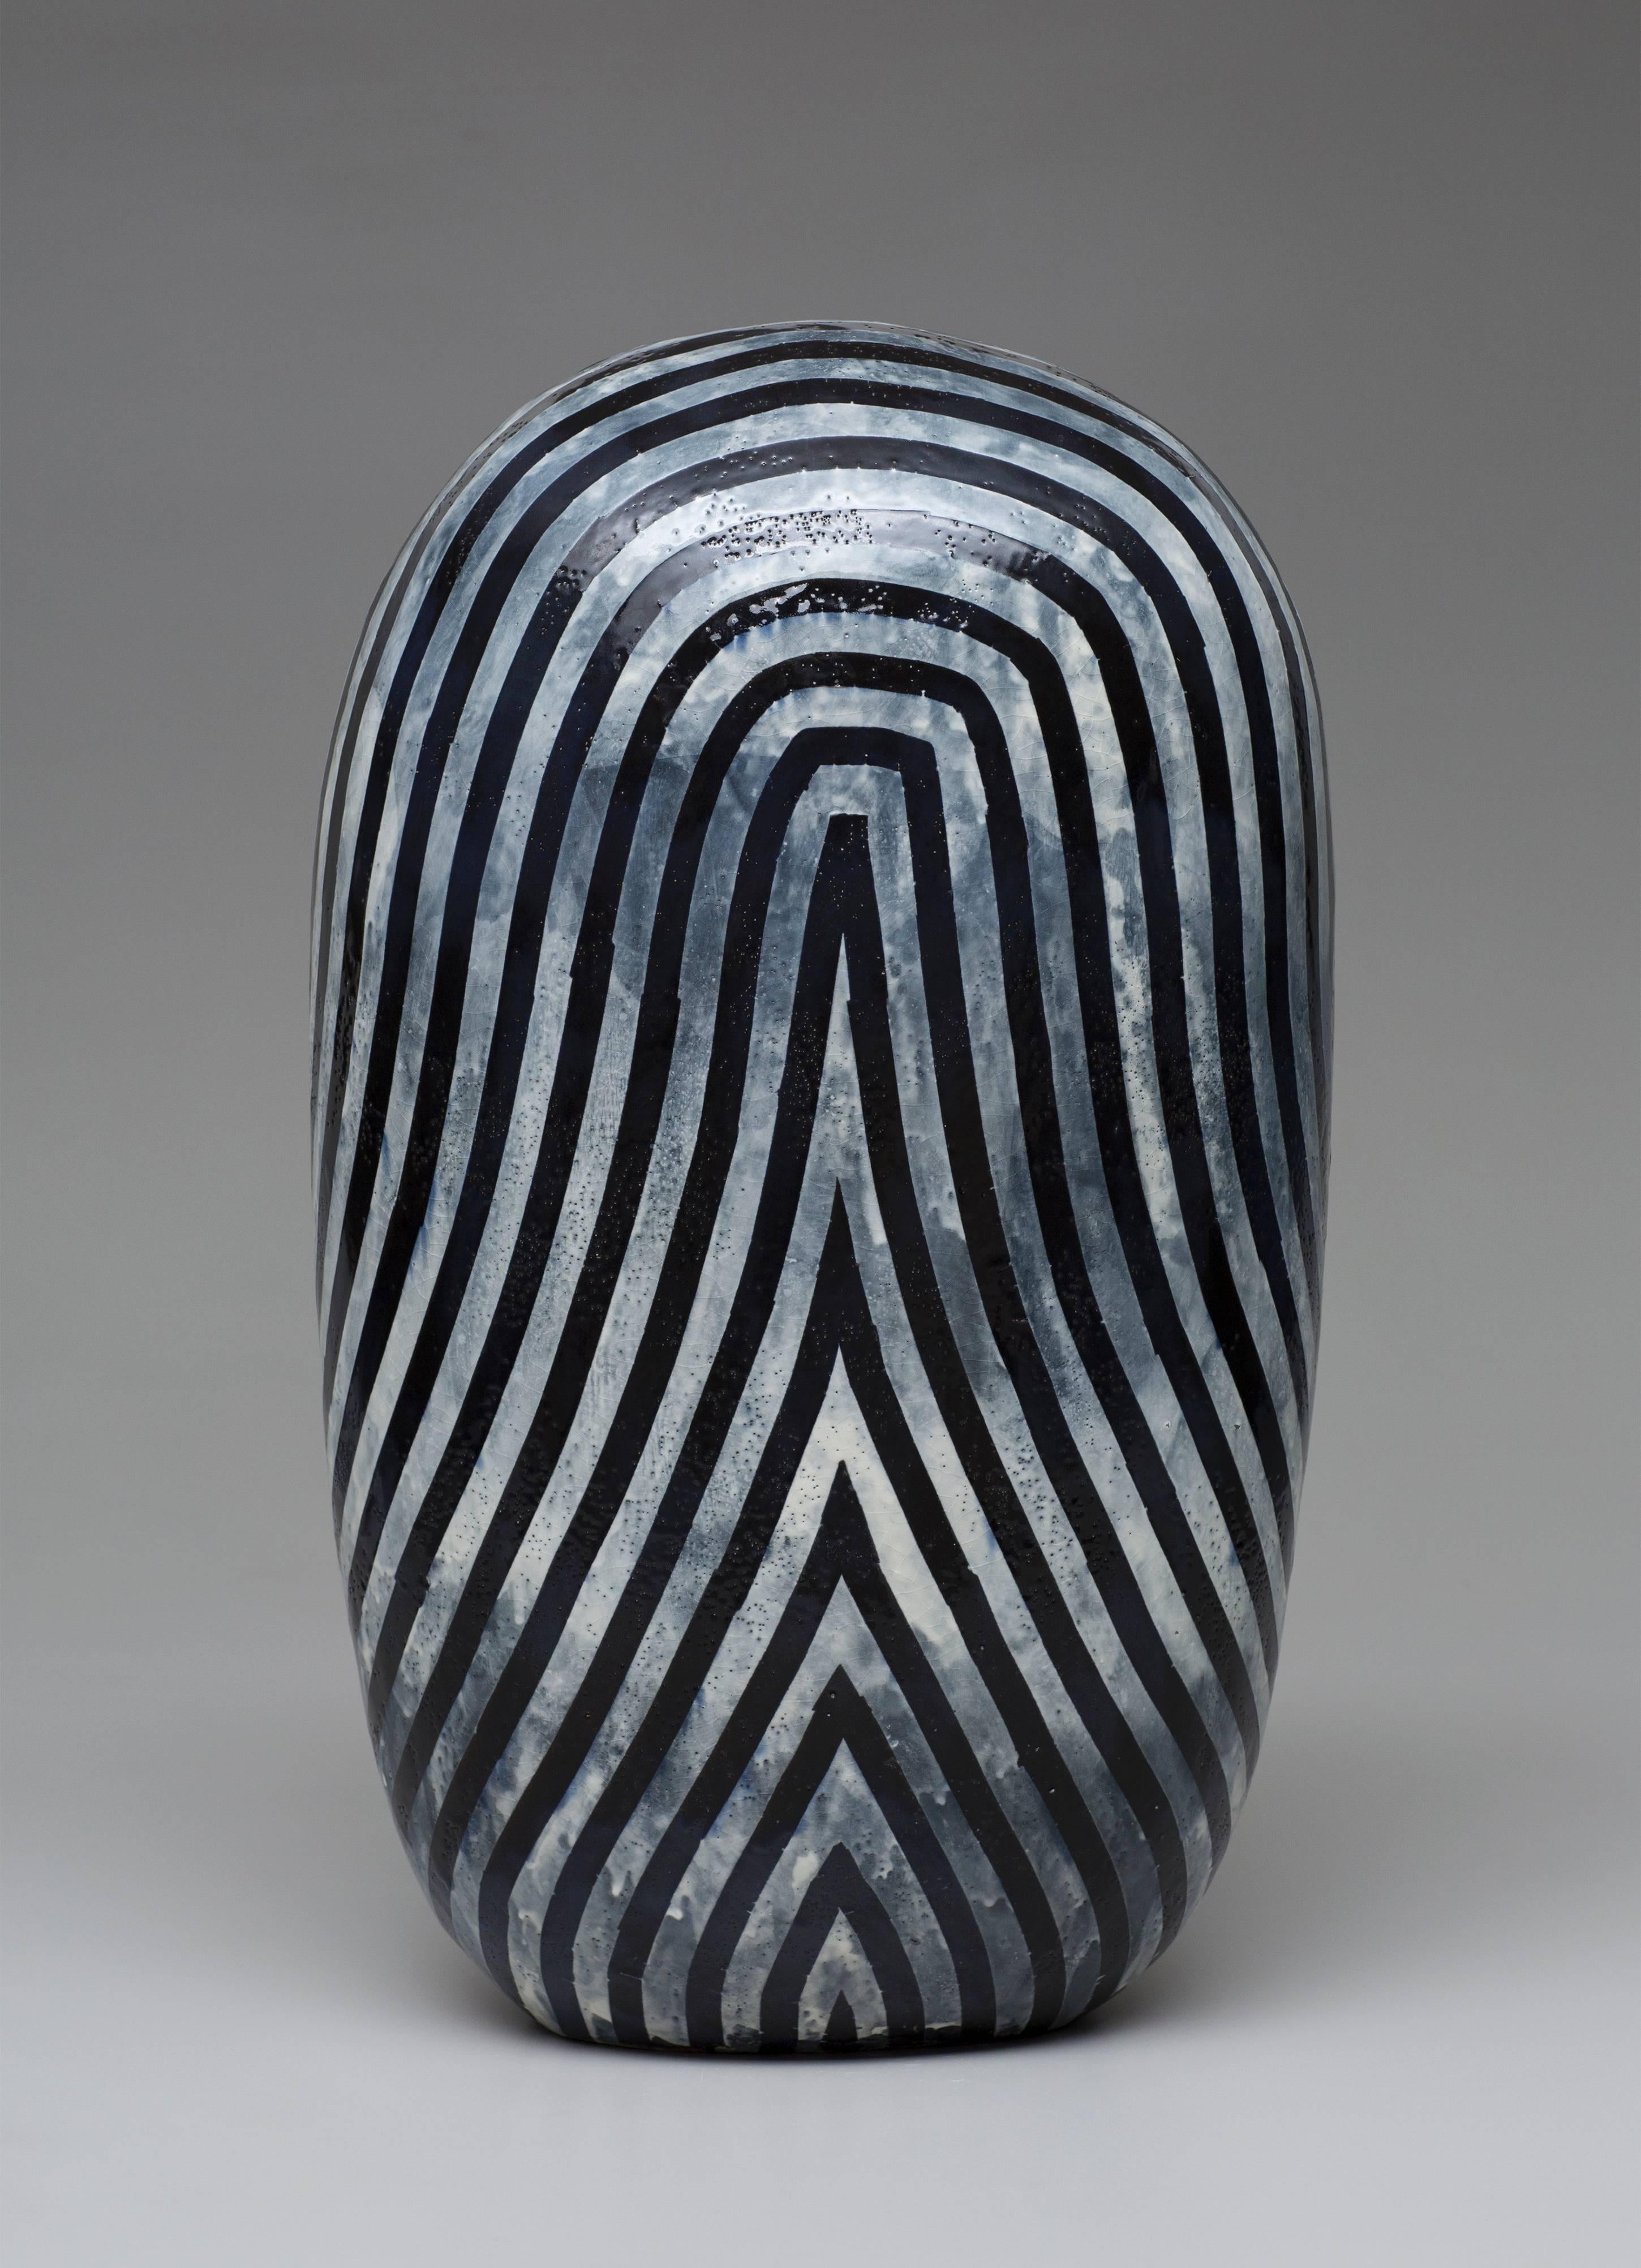 Untitled Dango Form by Jun Kaneko, Ceramic and Glazing with Stripe Pattern, 2014 1